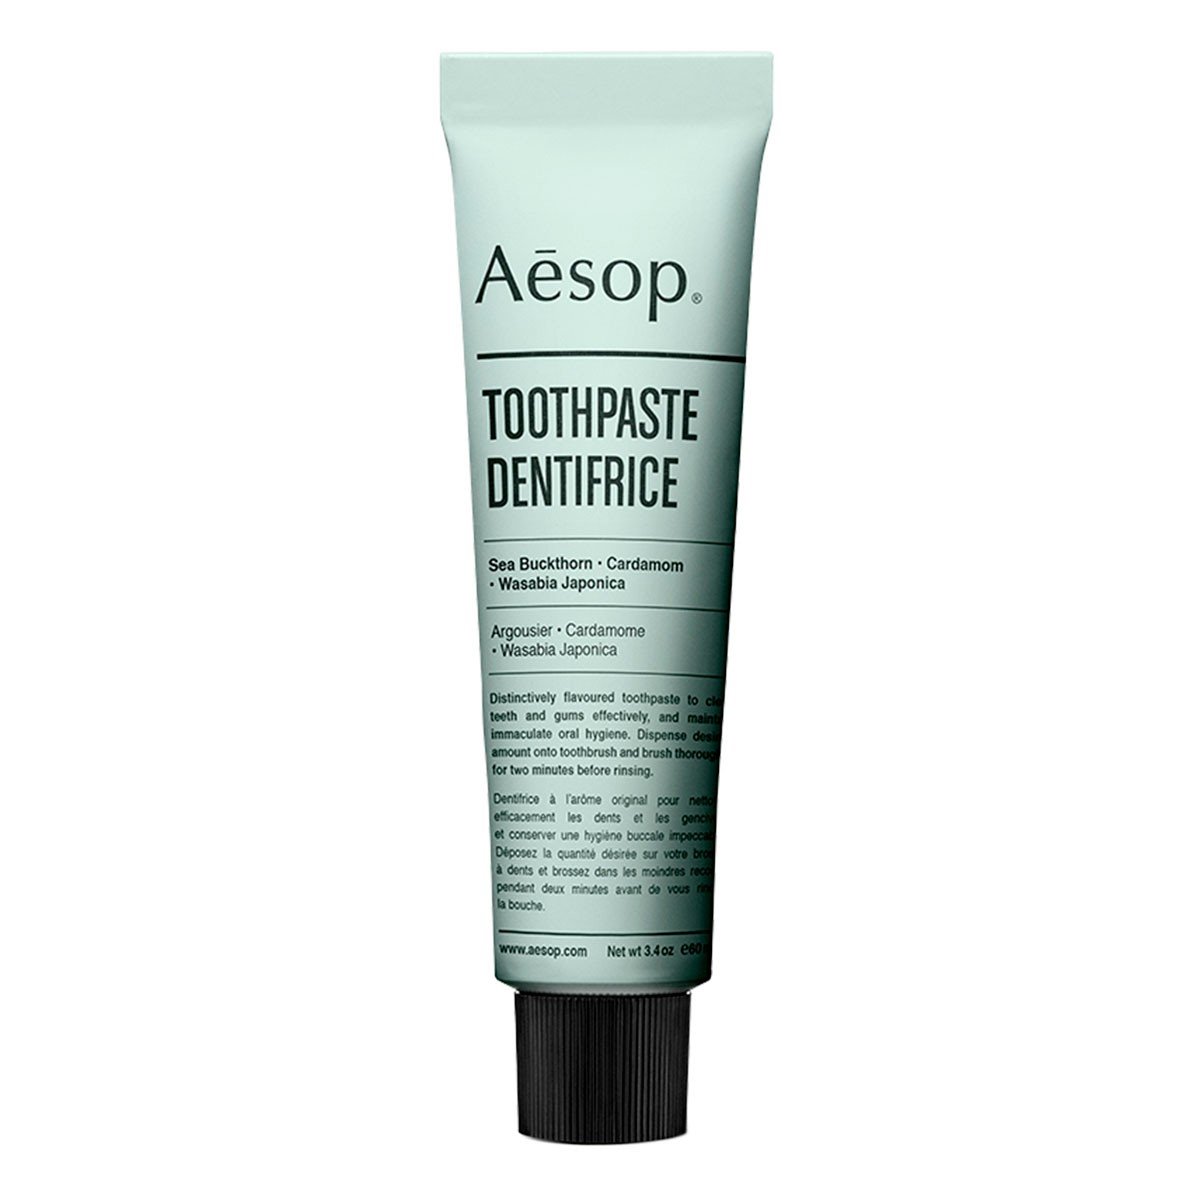 aesop-toothpaste-pasta-de-dientes